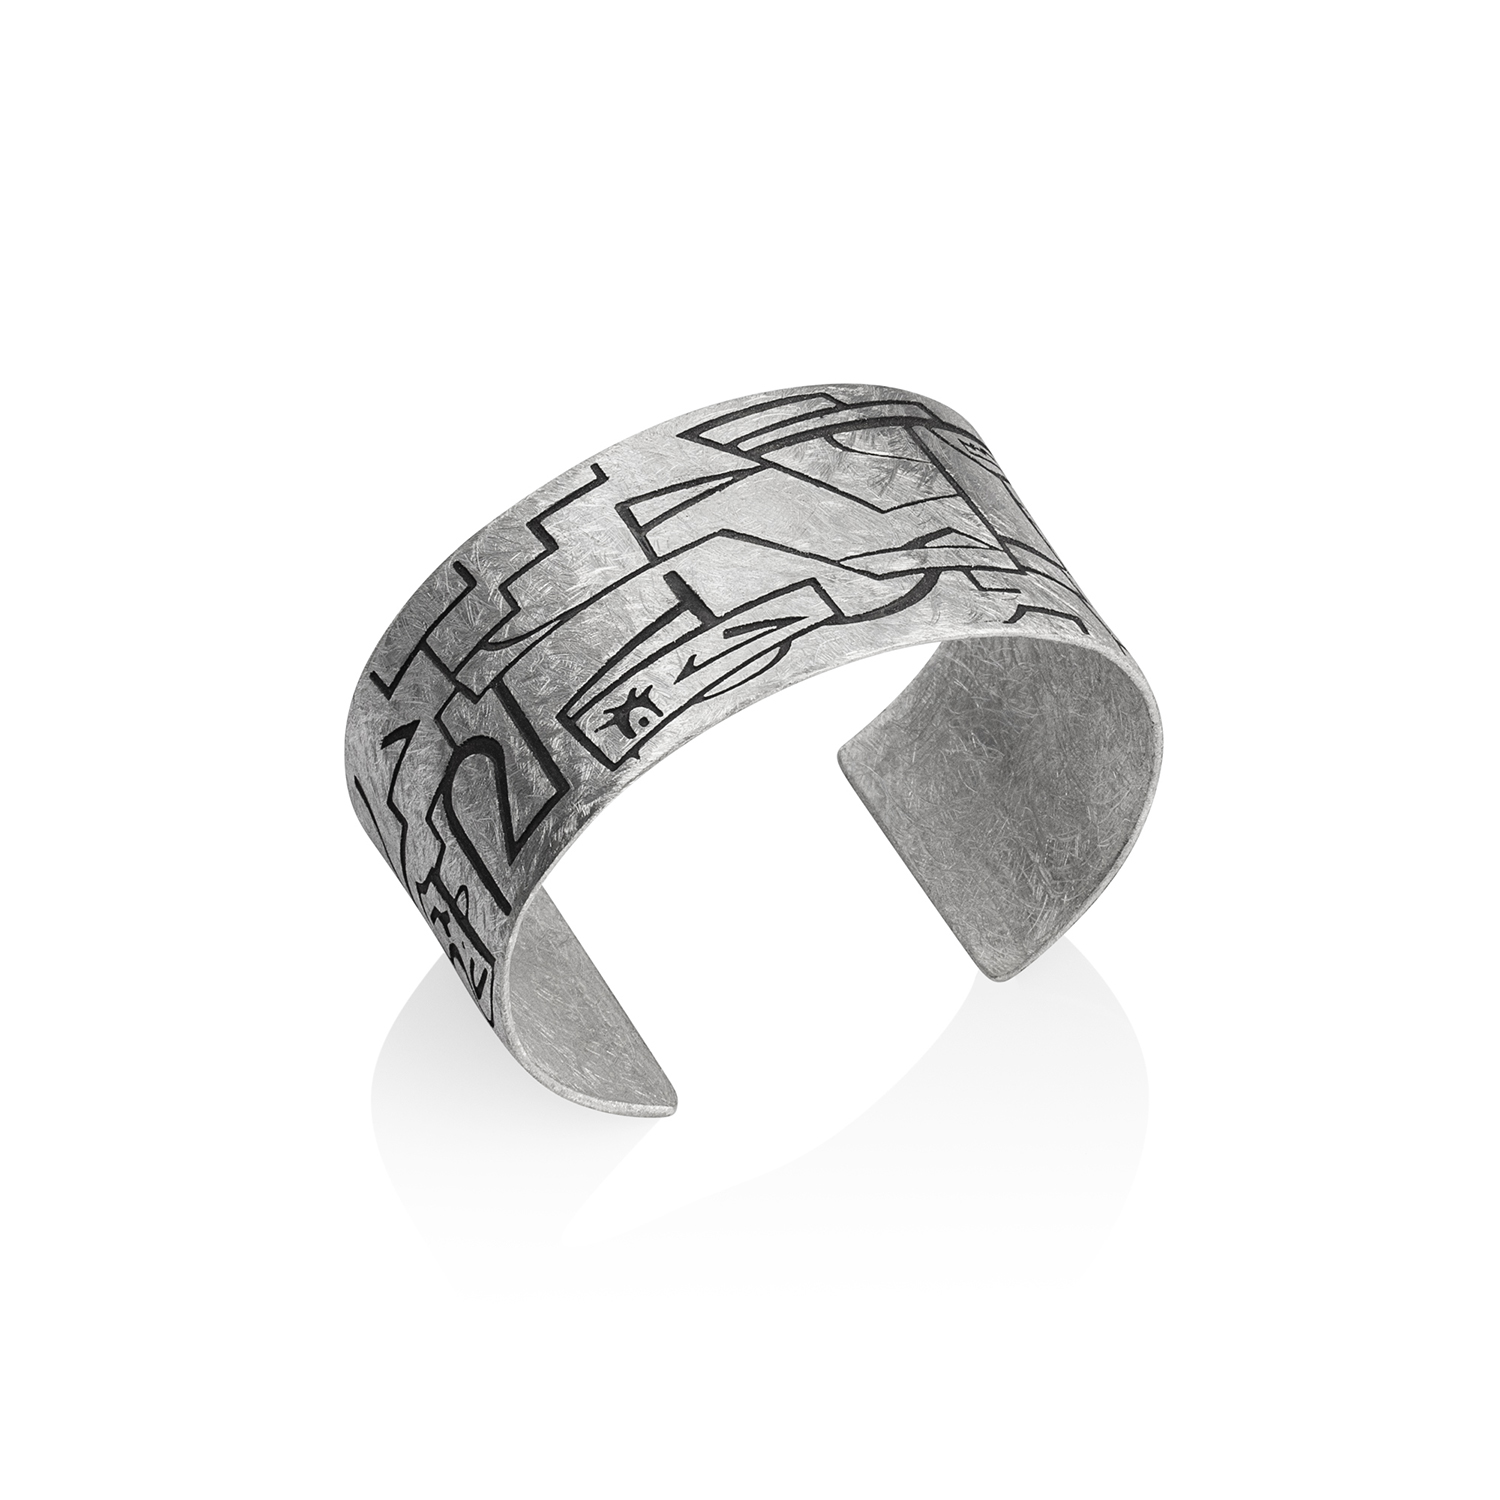 Silver Cubism bracelet